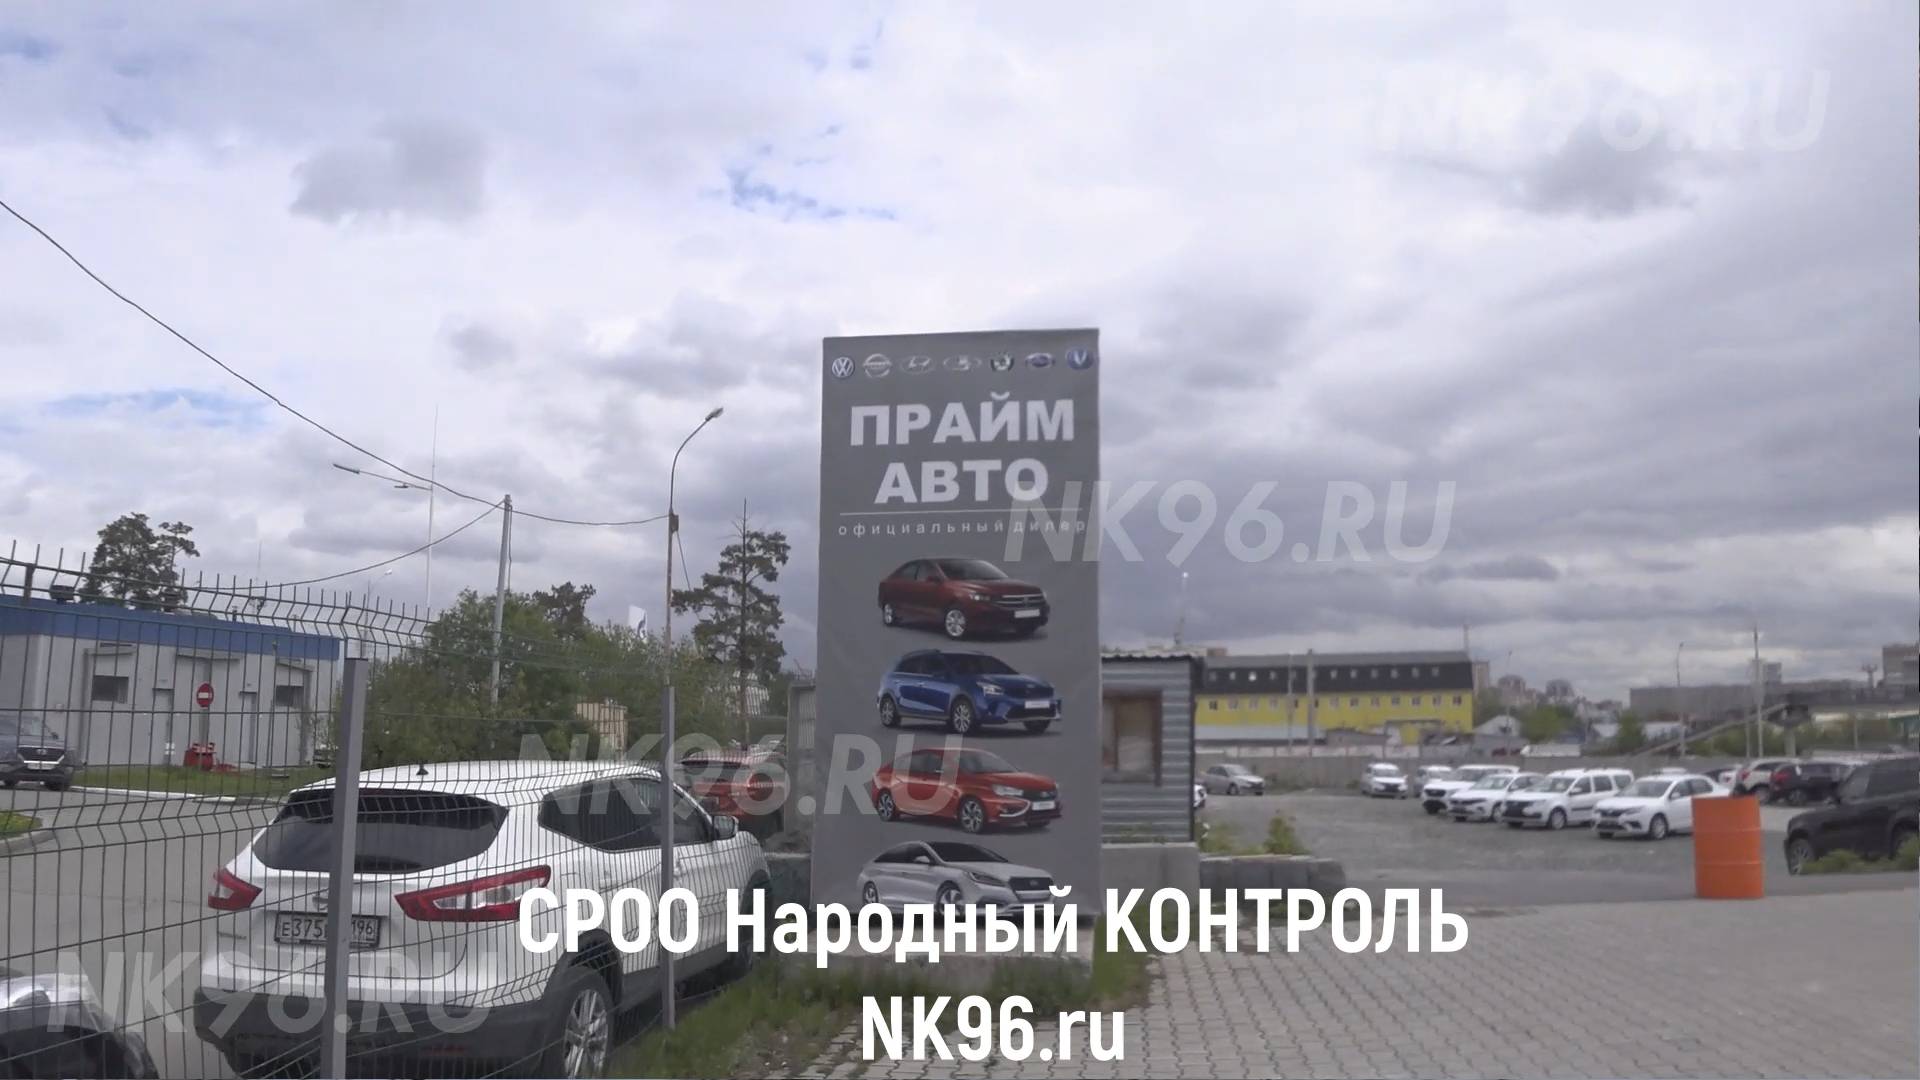 Автосалон «Прайм-АВТО» на Черкасской, 3 – кредит да-да-да, наличные нет-нет-нет